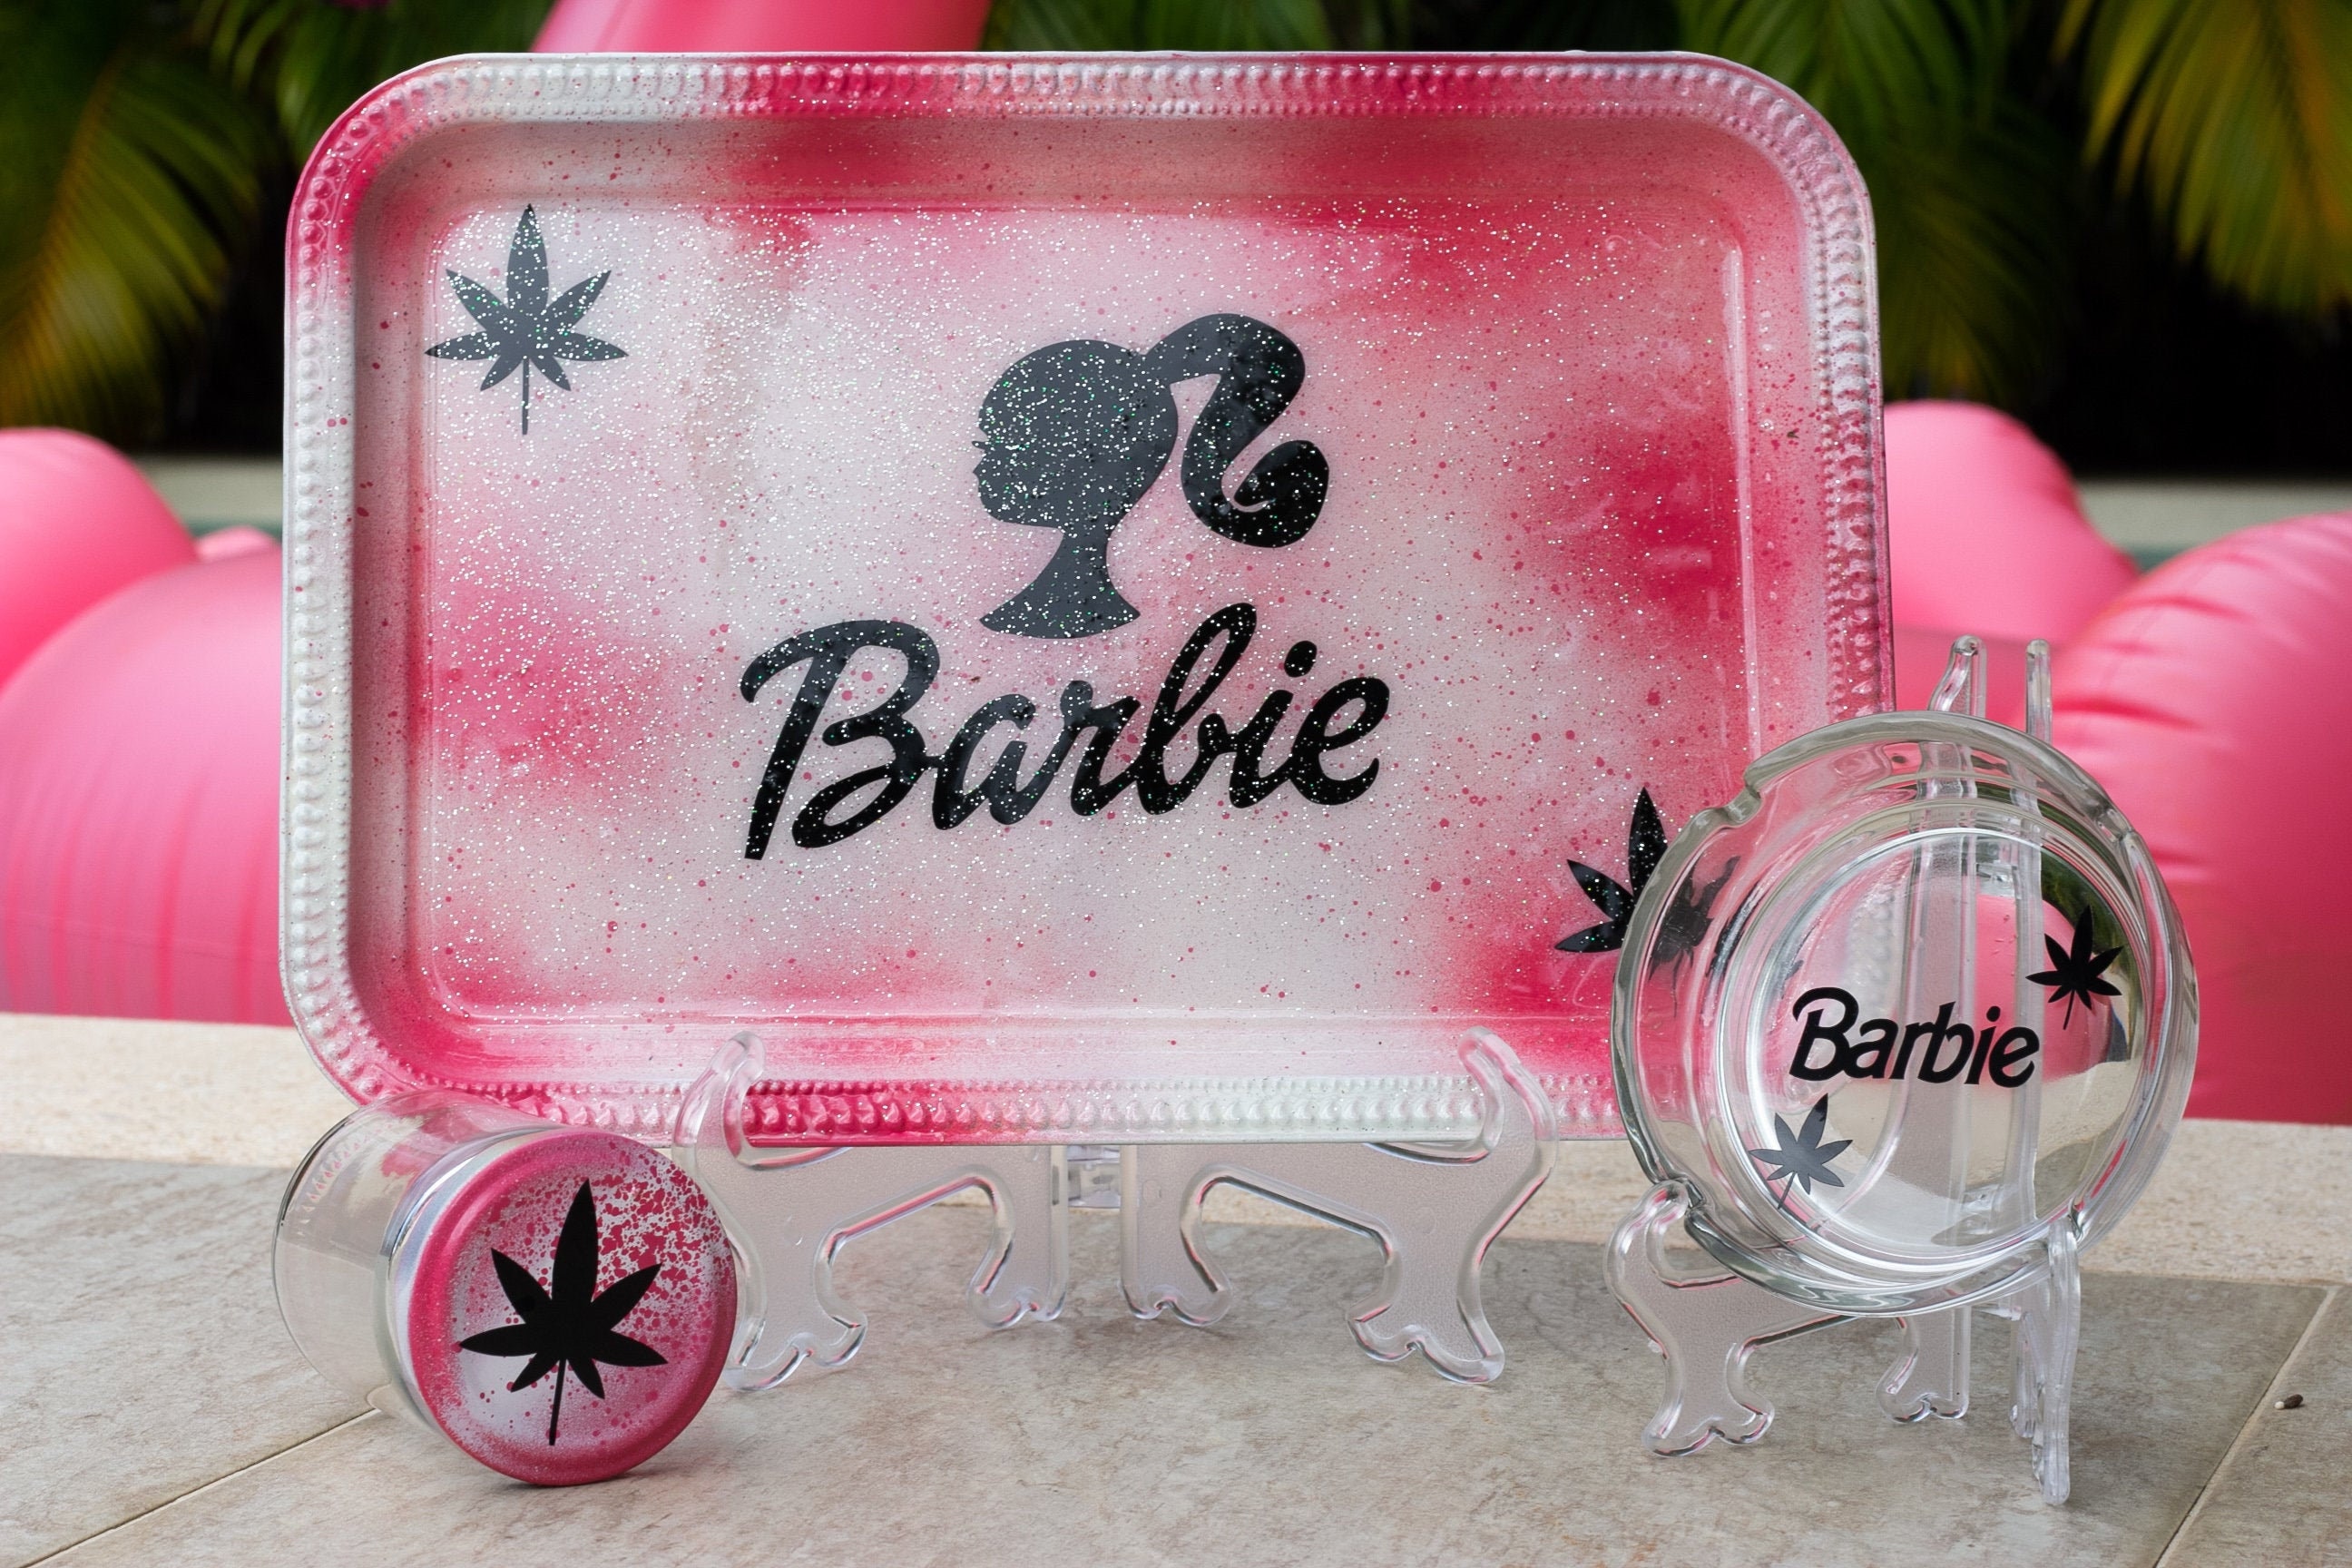 Look Like Barbie Smoke Like Marley Rolling Tray Set - lacustomdesignz